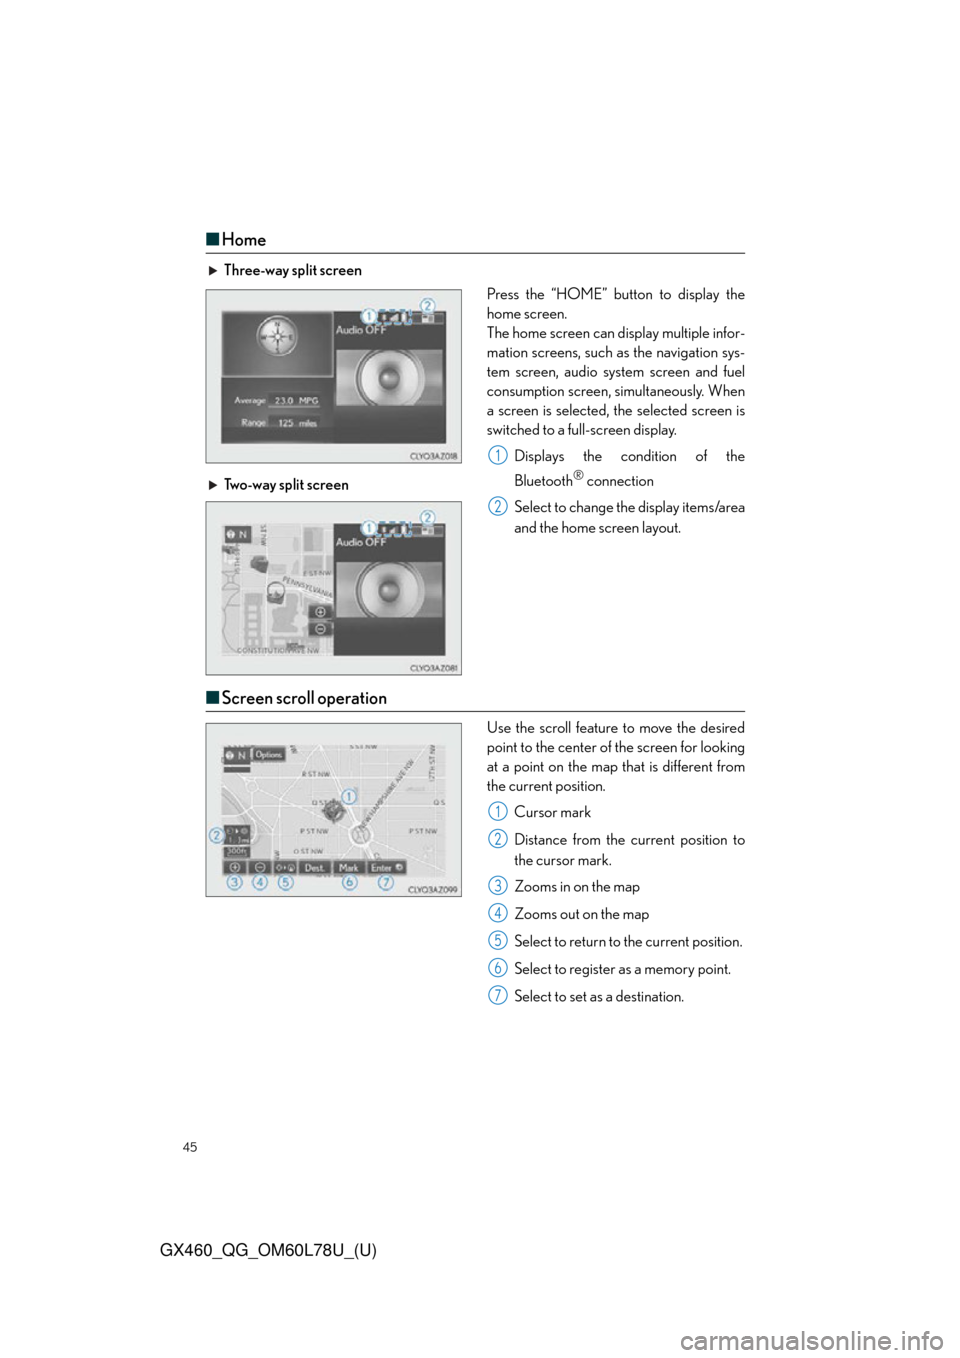 Lexus GX460 2015  Alphabetical index / LEXUS 2015 GX460 QUICK GUIDE  (OM60L78U) Service Manual 45
GX460_QG_OM60L78U_(U)
■Home
Three-way split screen
Press the “HOME” button to display the
home screen.
The home screen can display multiple infor-
mation screens, such as the navigation sys-
